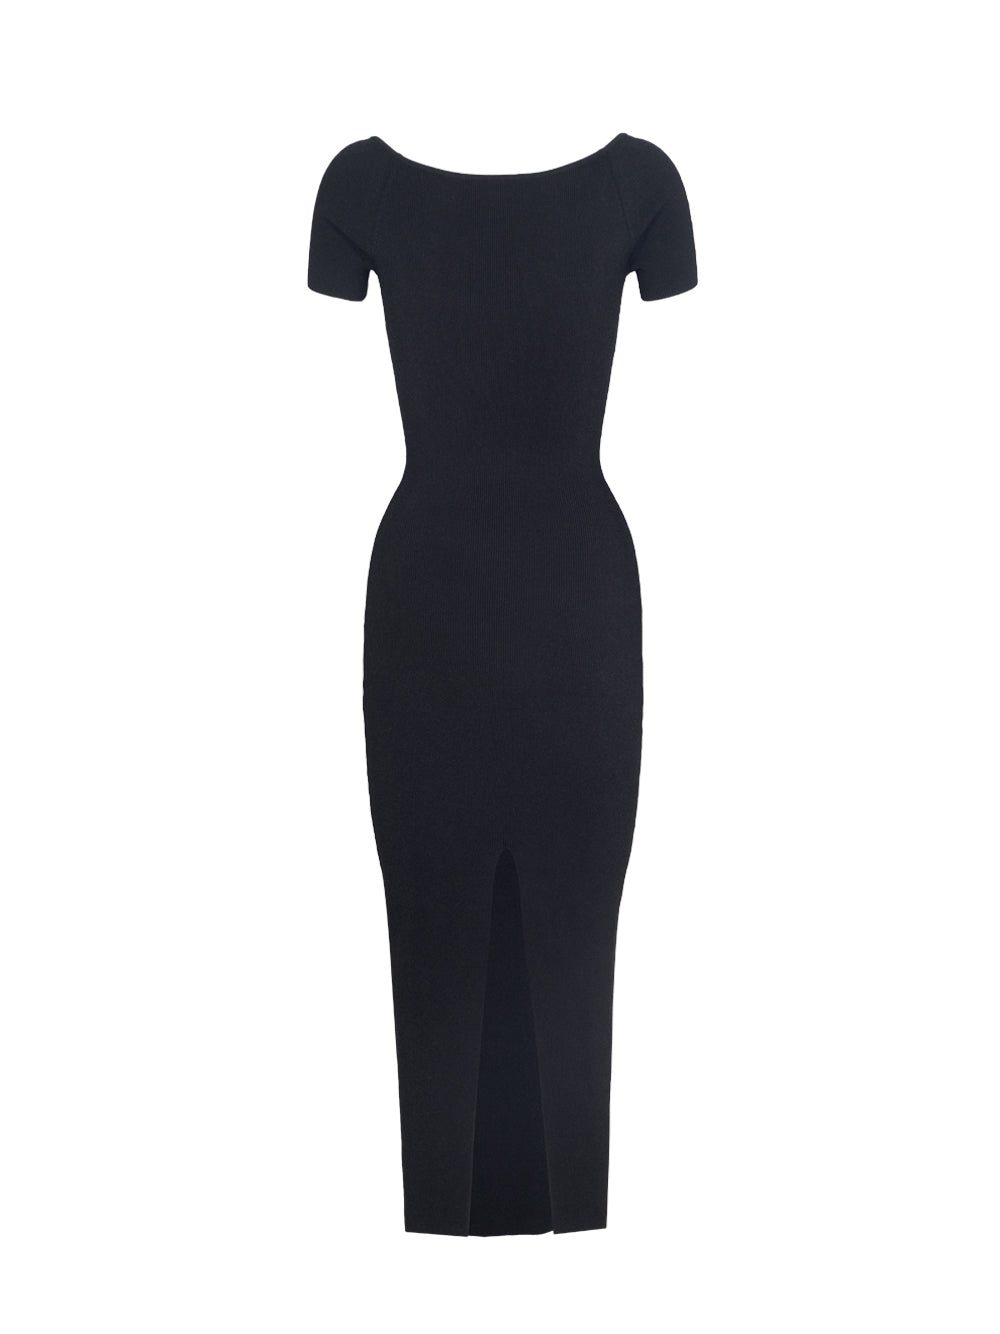 Short Sleeve Gaia Dress (Black)